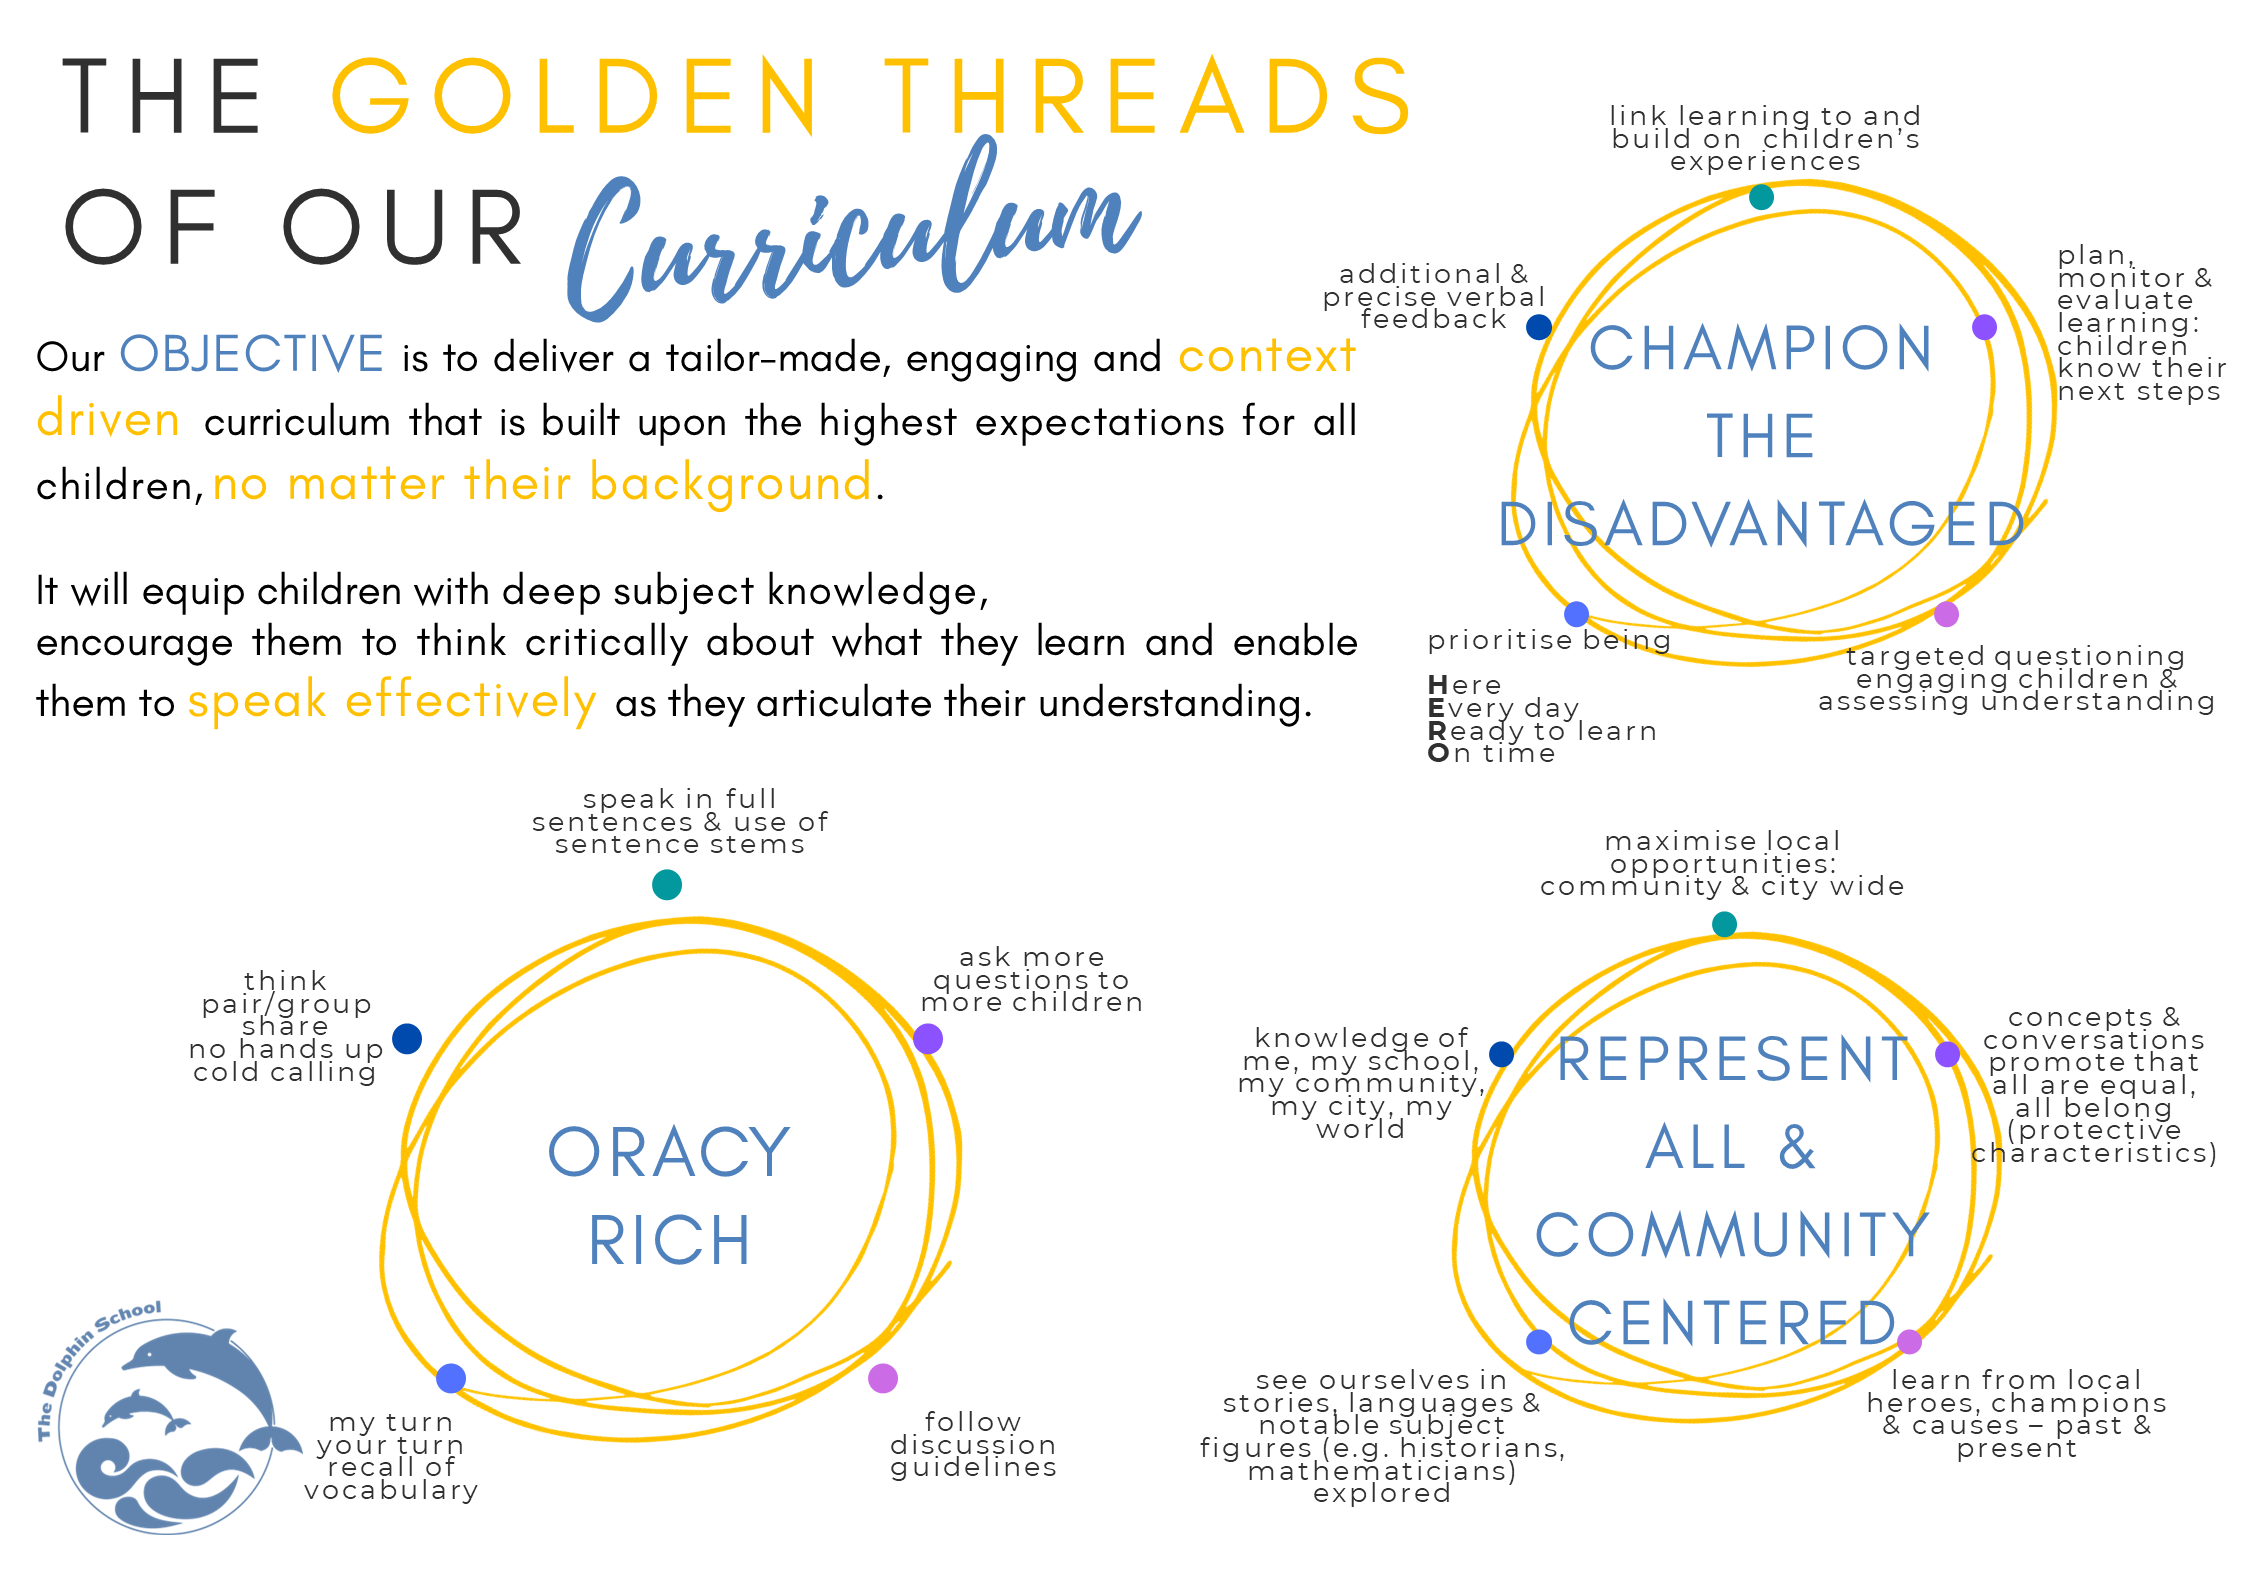 Our golden thread curriculum